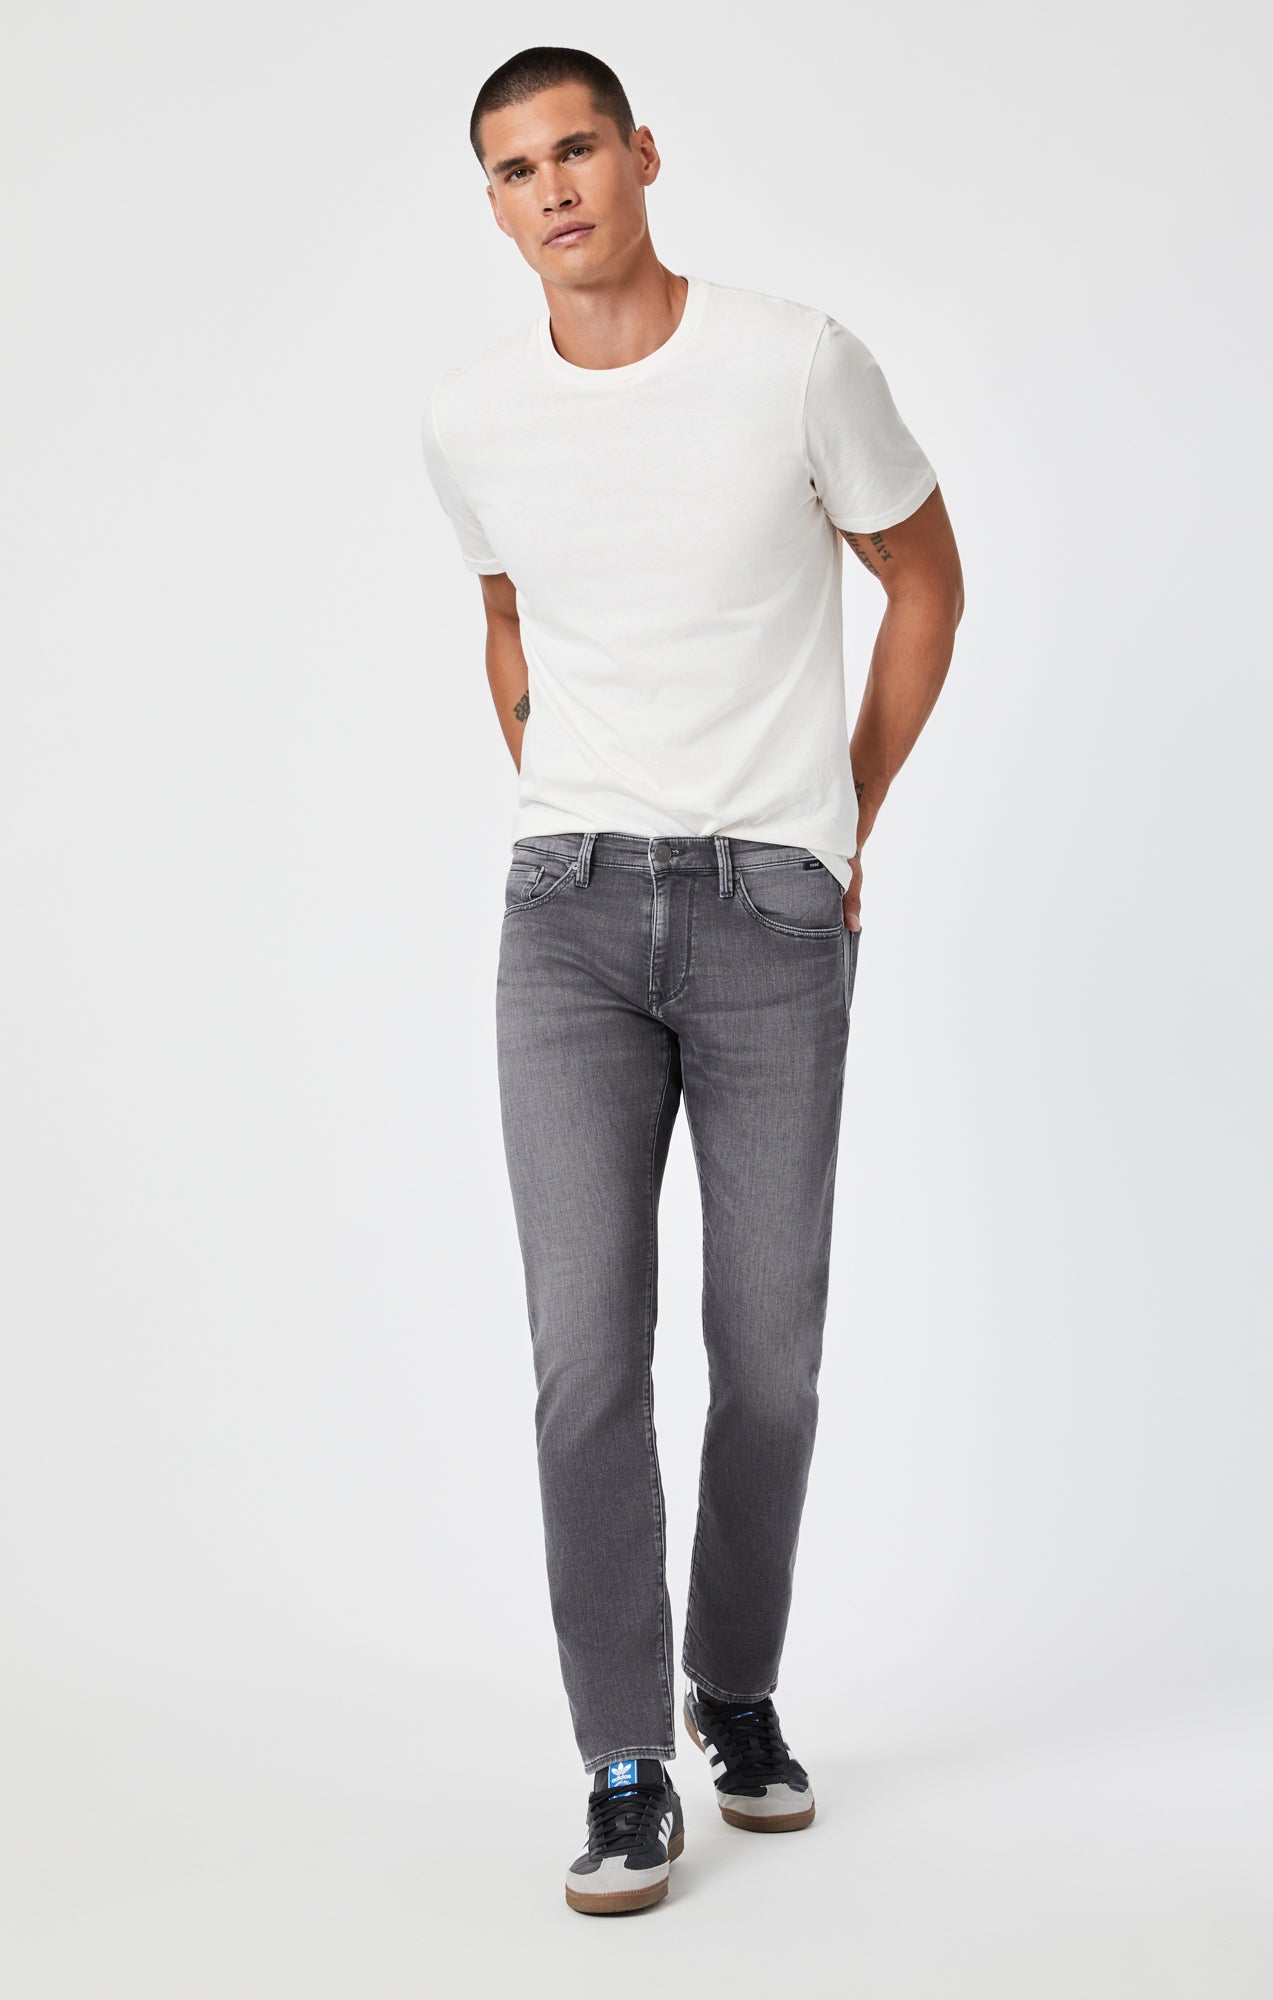 Grey Jeans for Men, Mens Grey Jeans